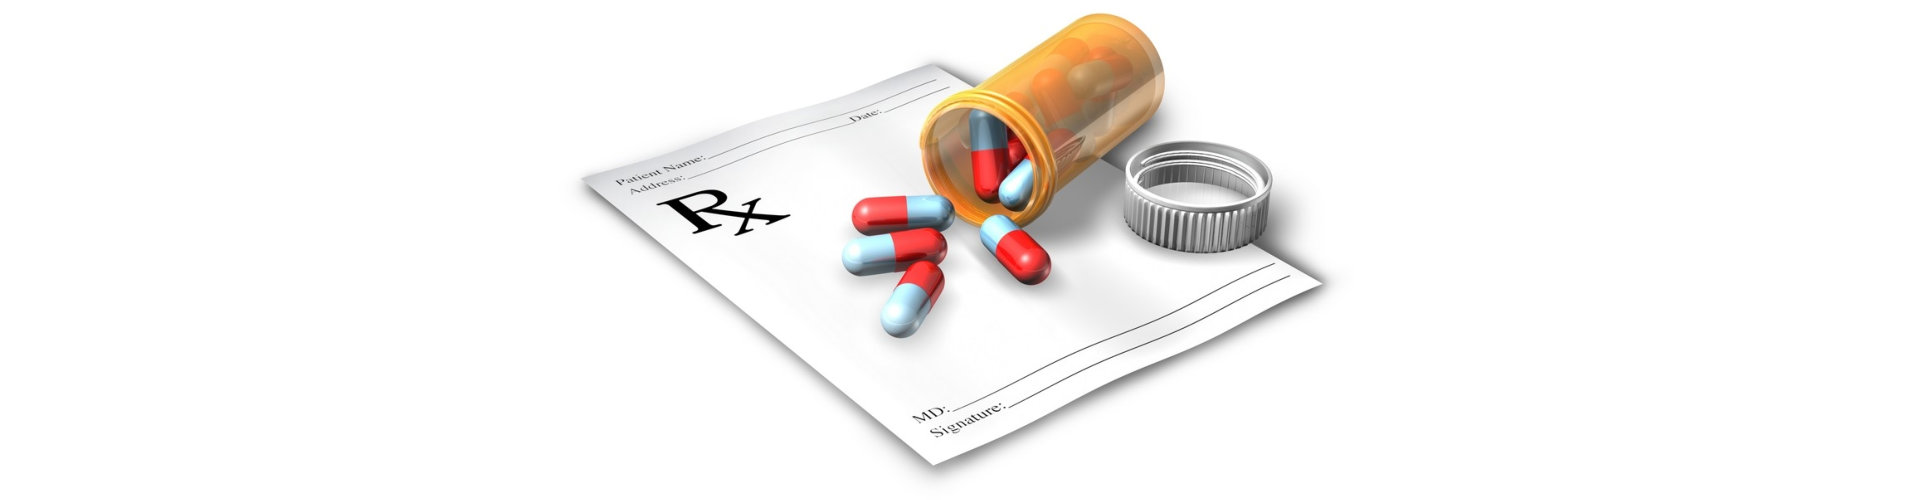 pills with prescription